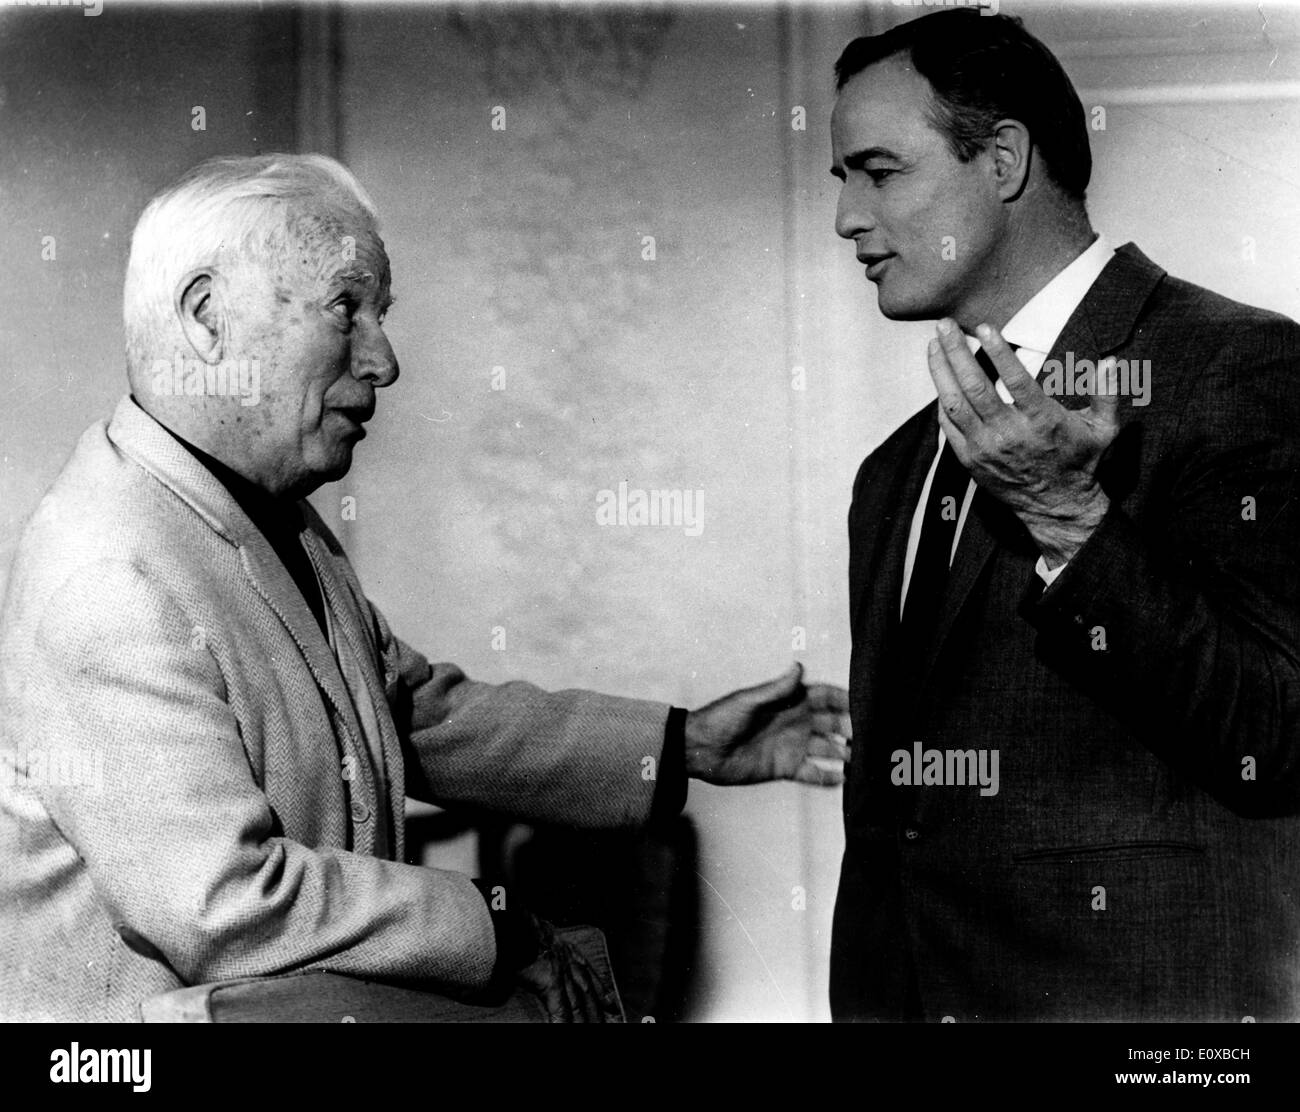 Actor Marlon Brando talking to director Charlie Chaplin Stock Photo - Alamy